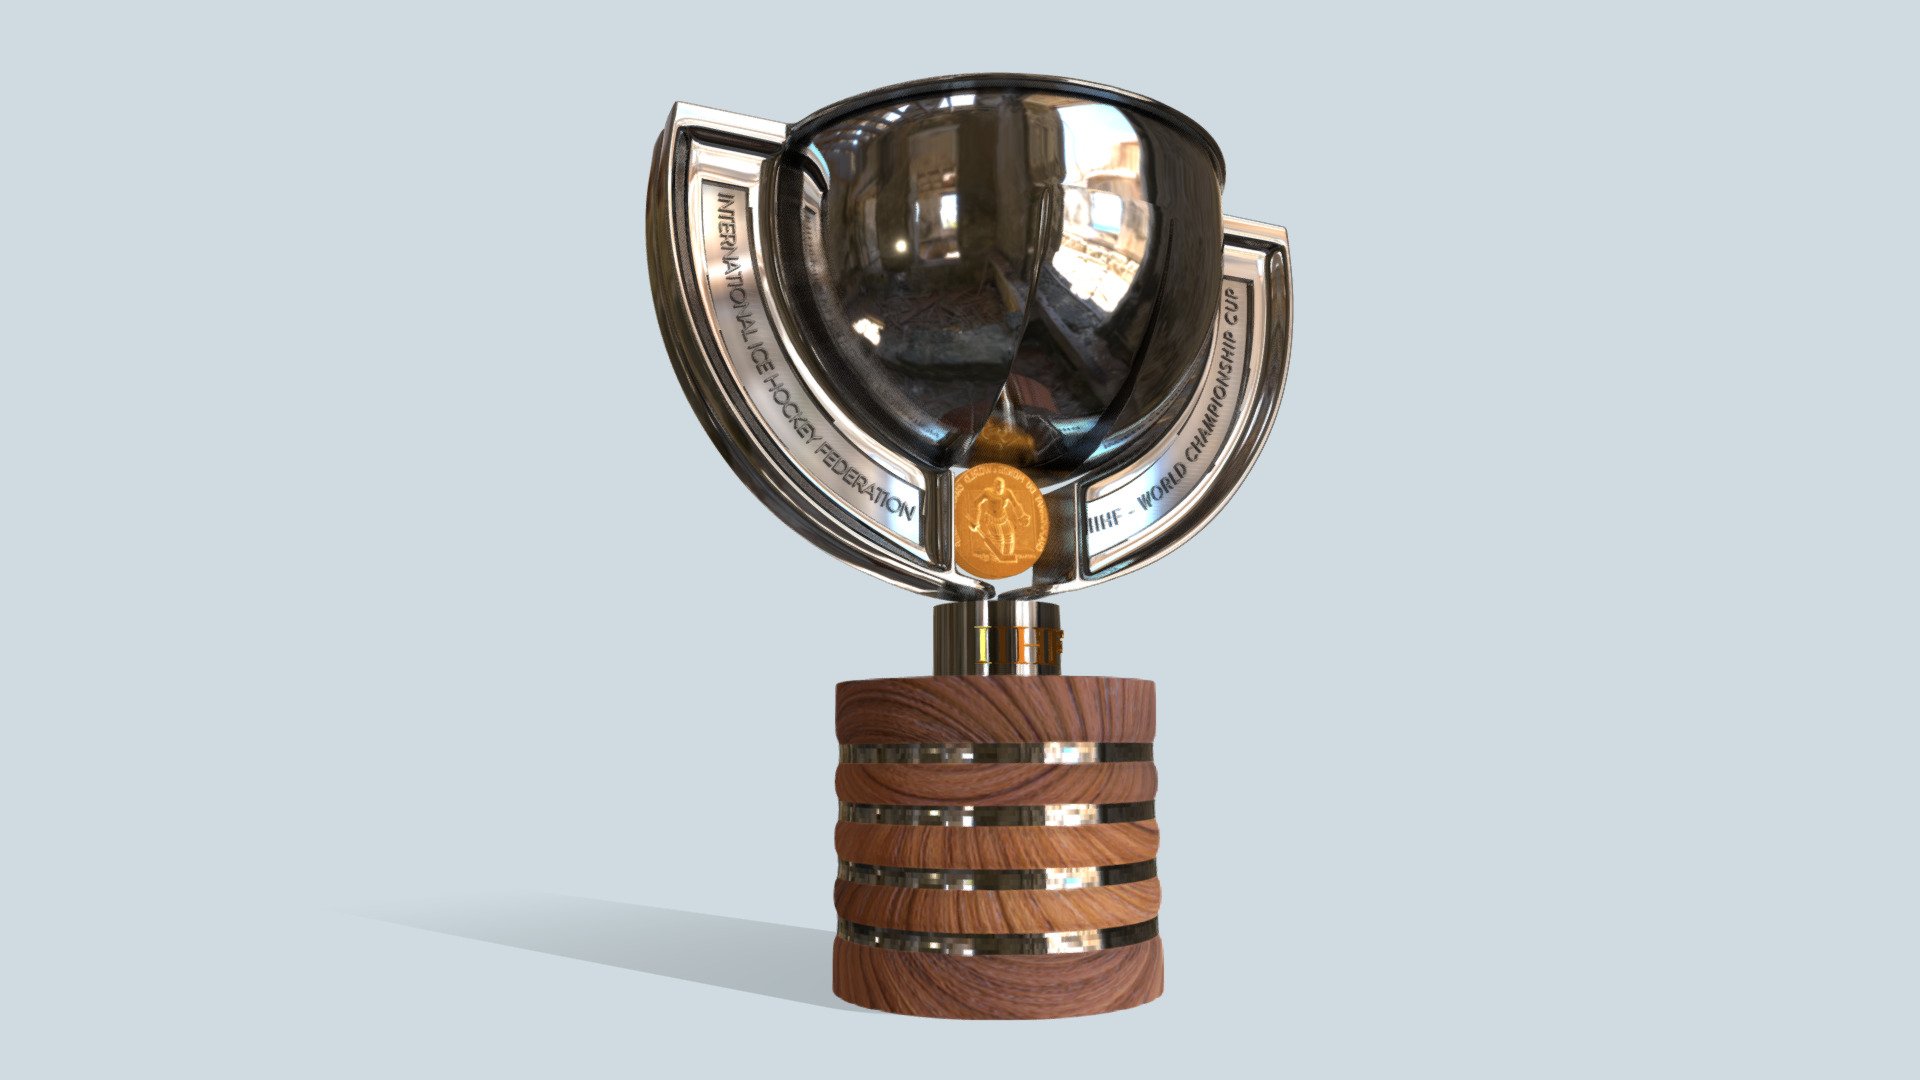 Icehockey World Championship Trophy (IIHF)